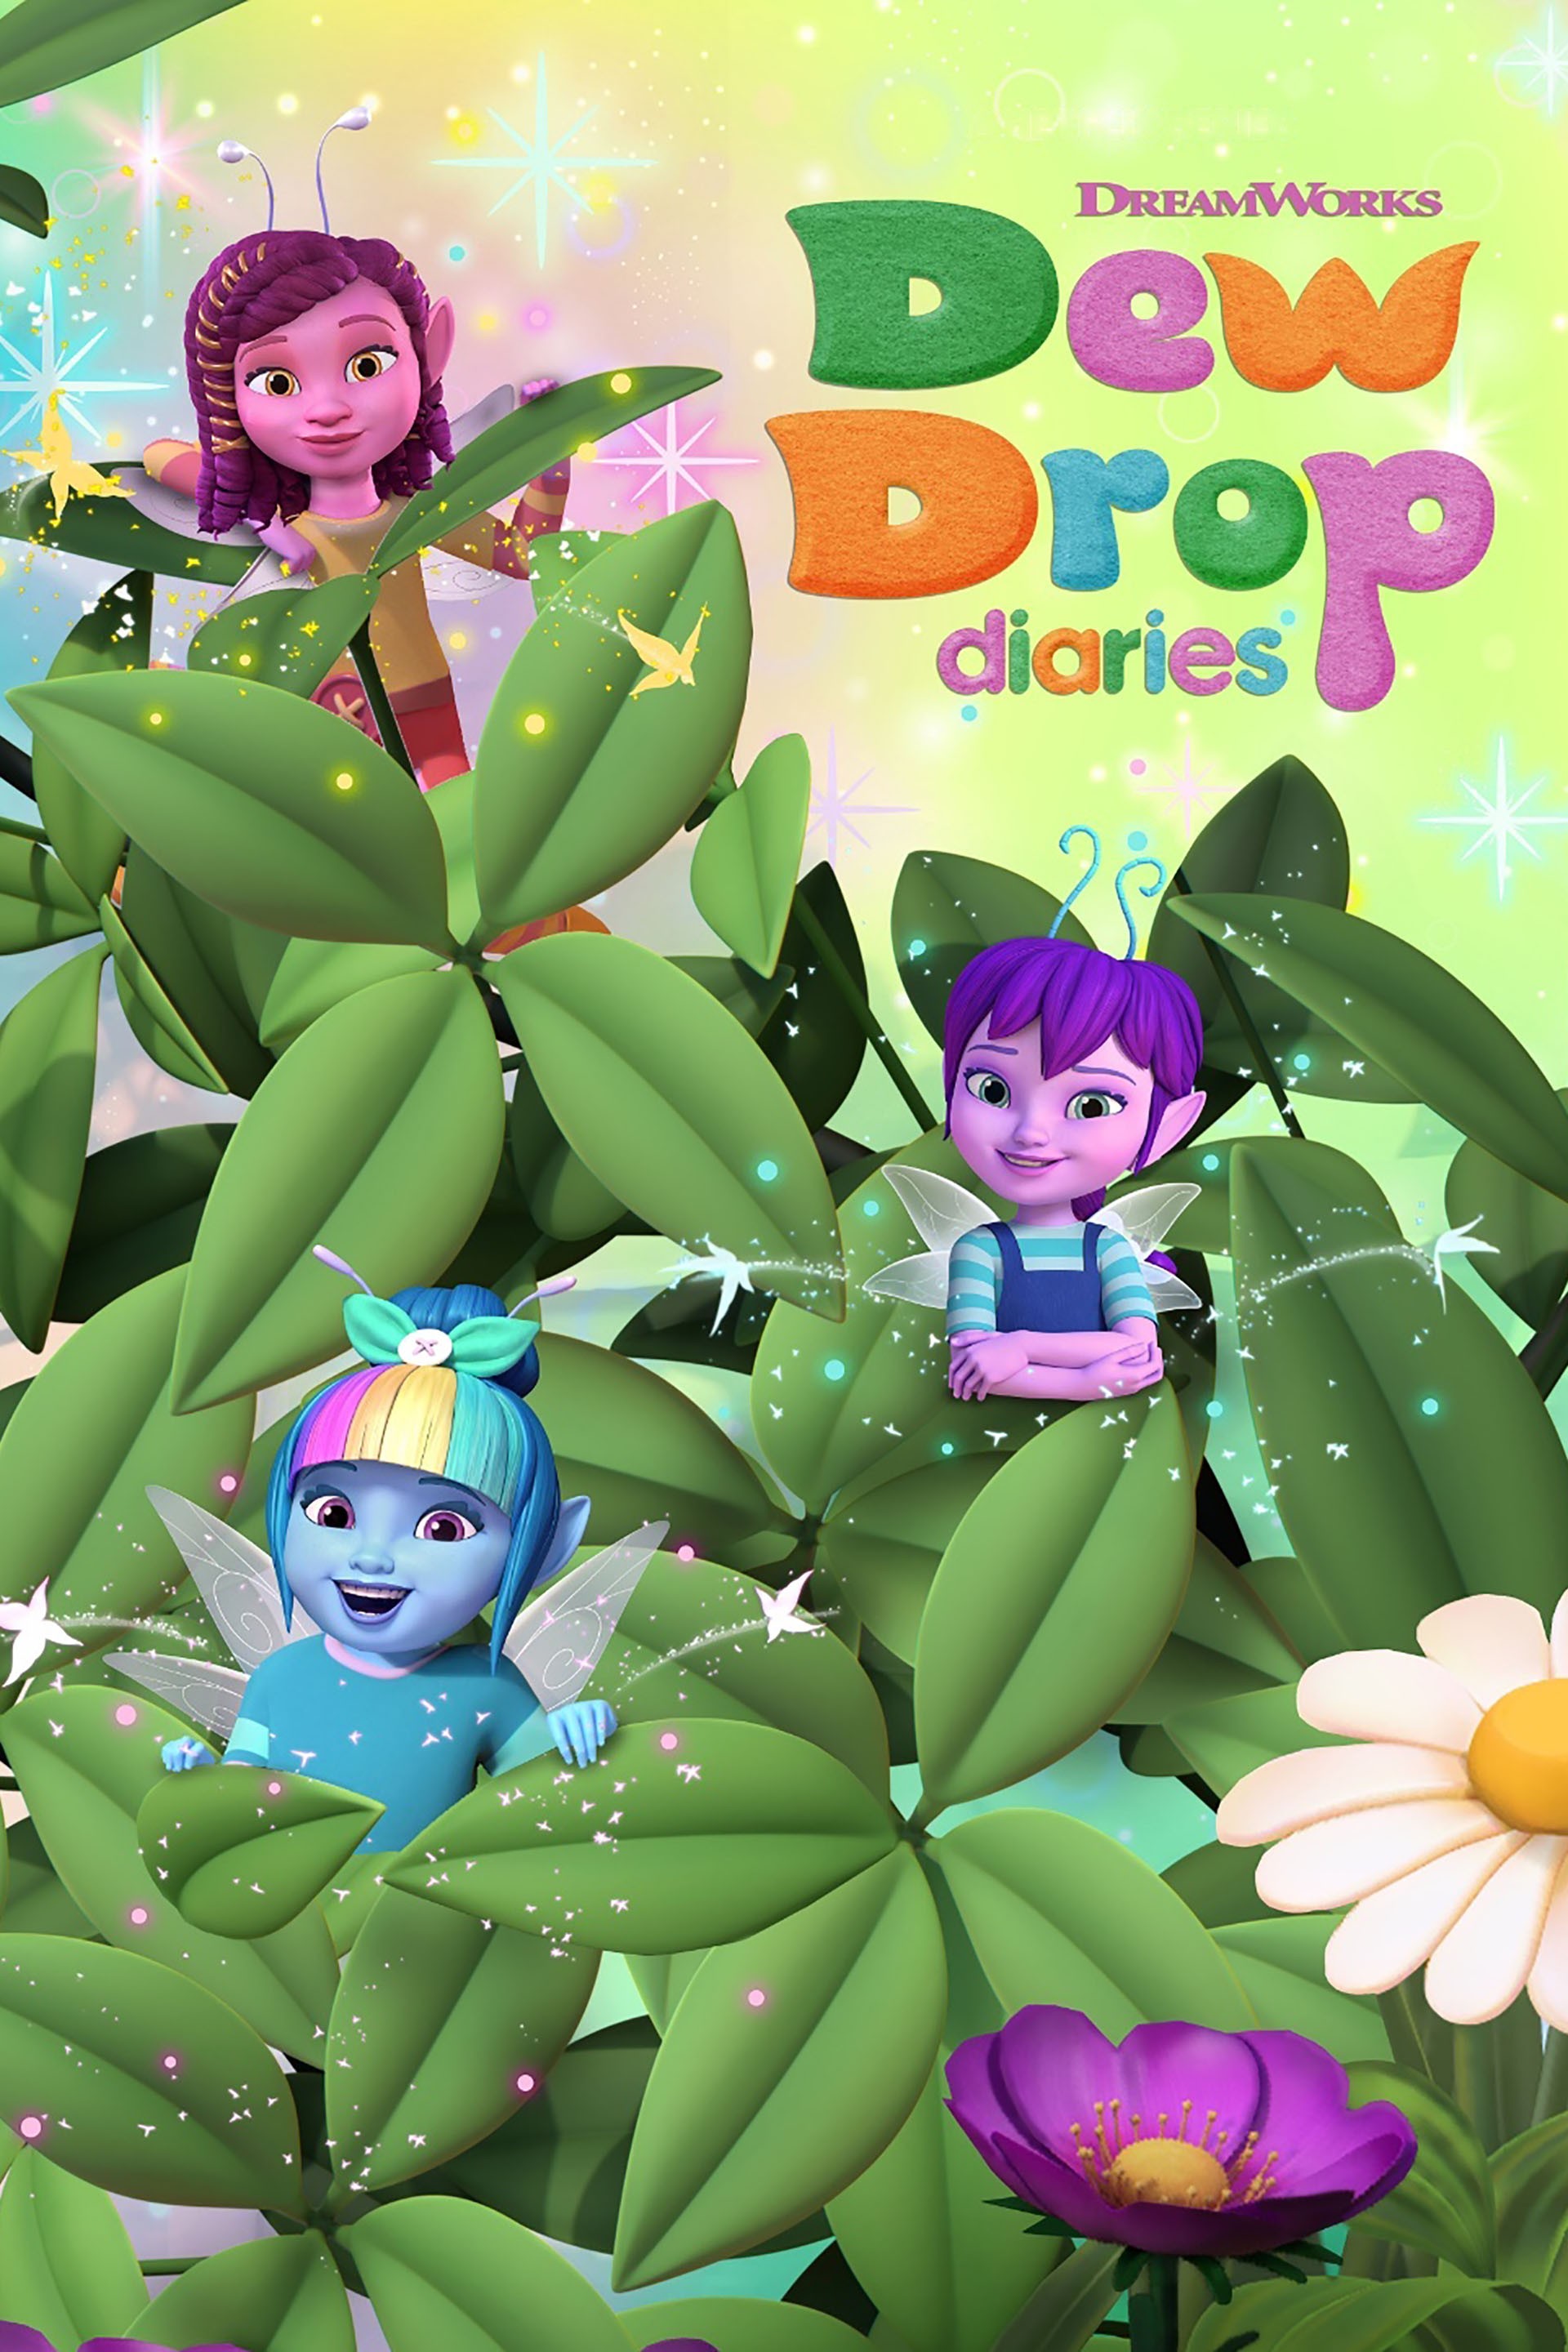 Dew Drop Diaries Season 1